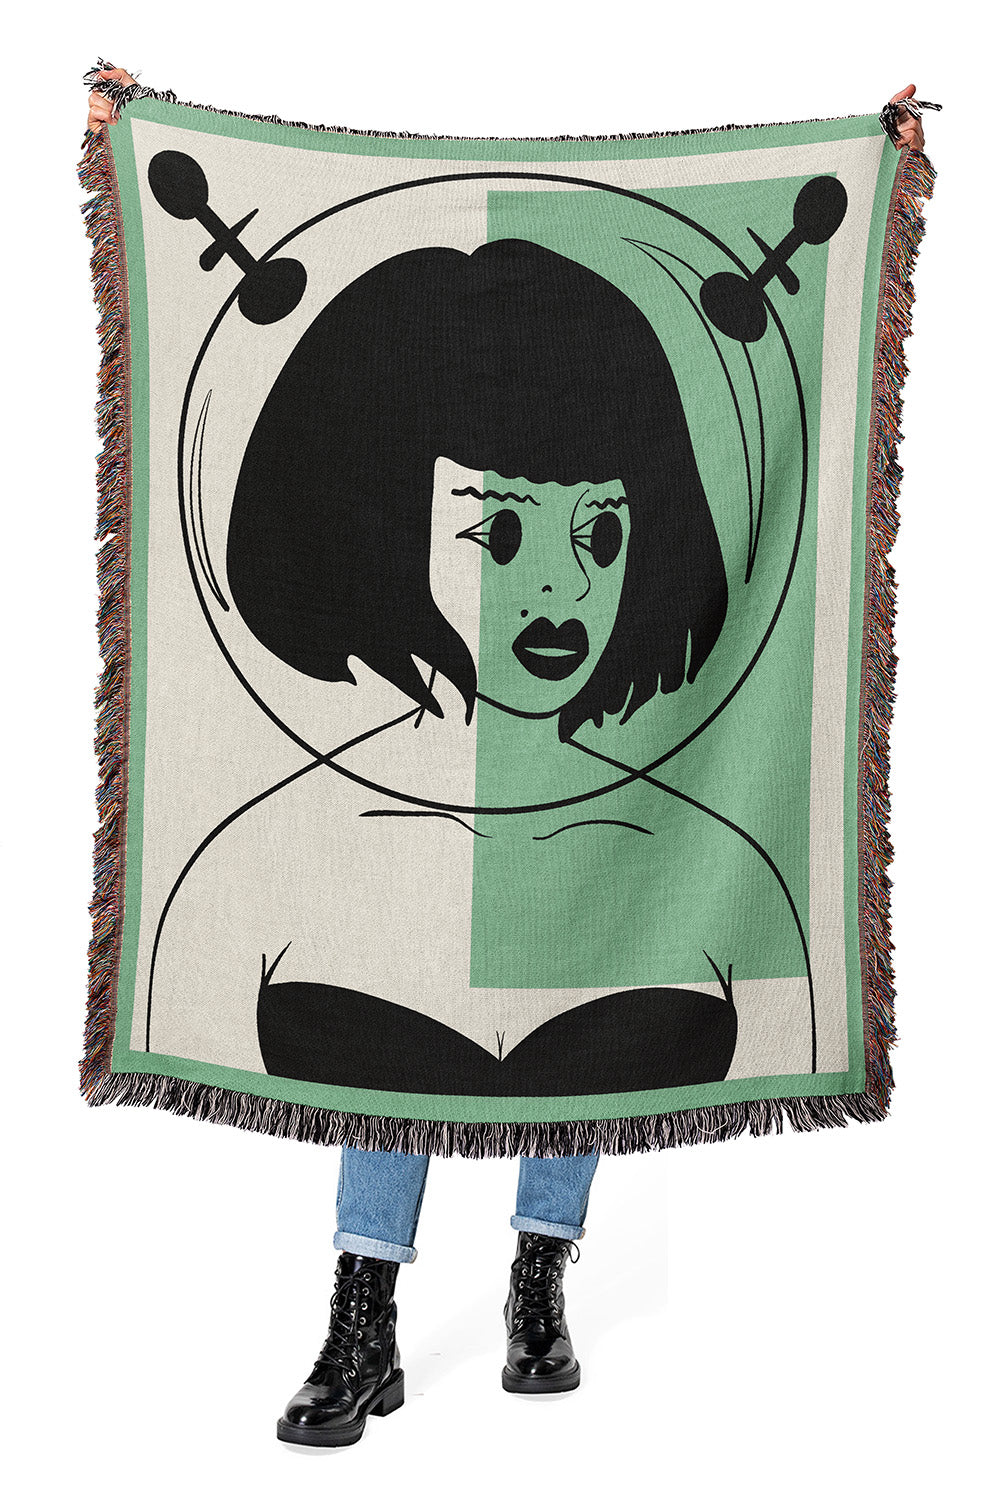 Galactic Muse Alien Cotton Woven Throw Blanket showcasing an alien art design in green, tan, and black.